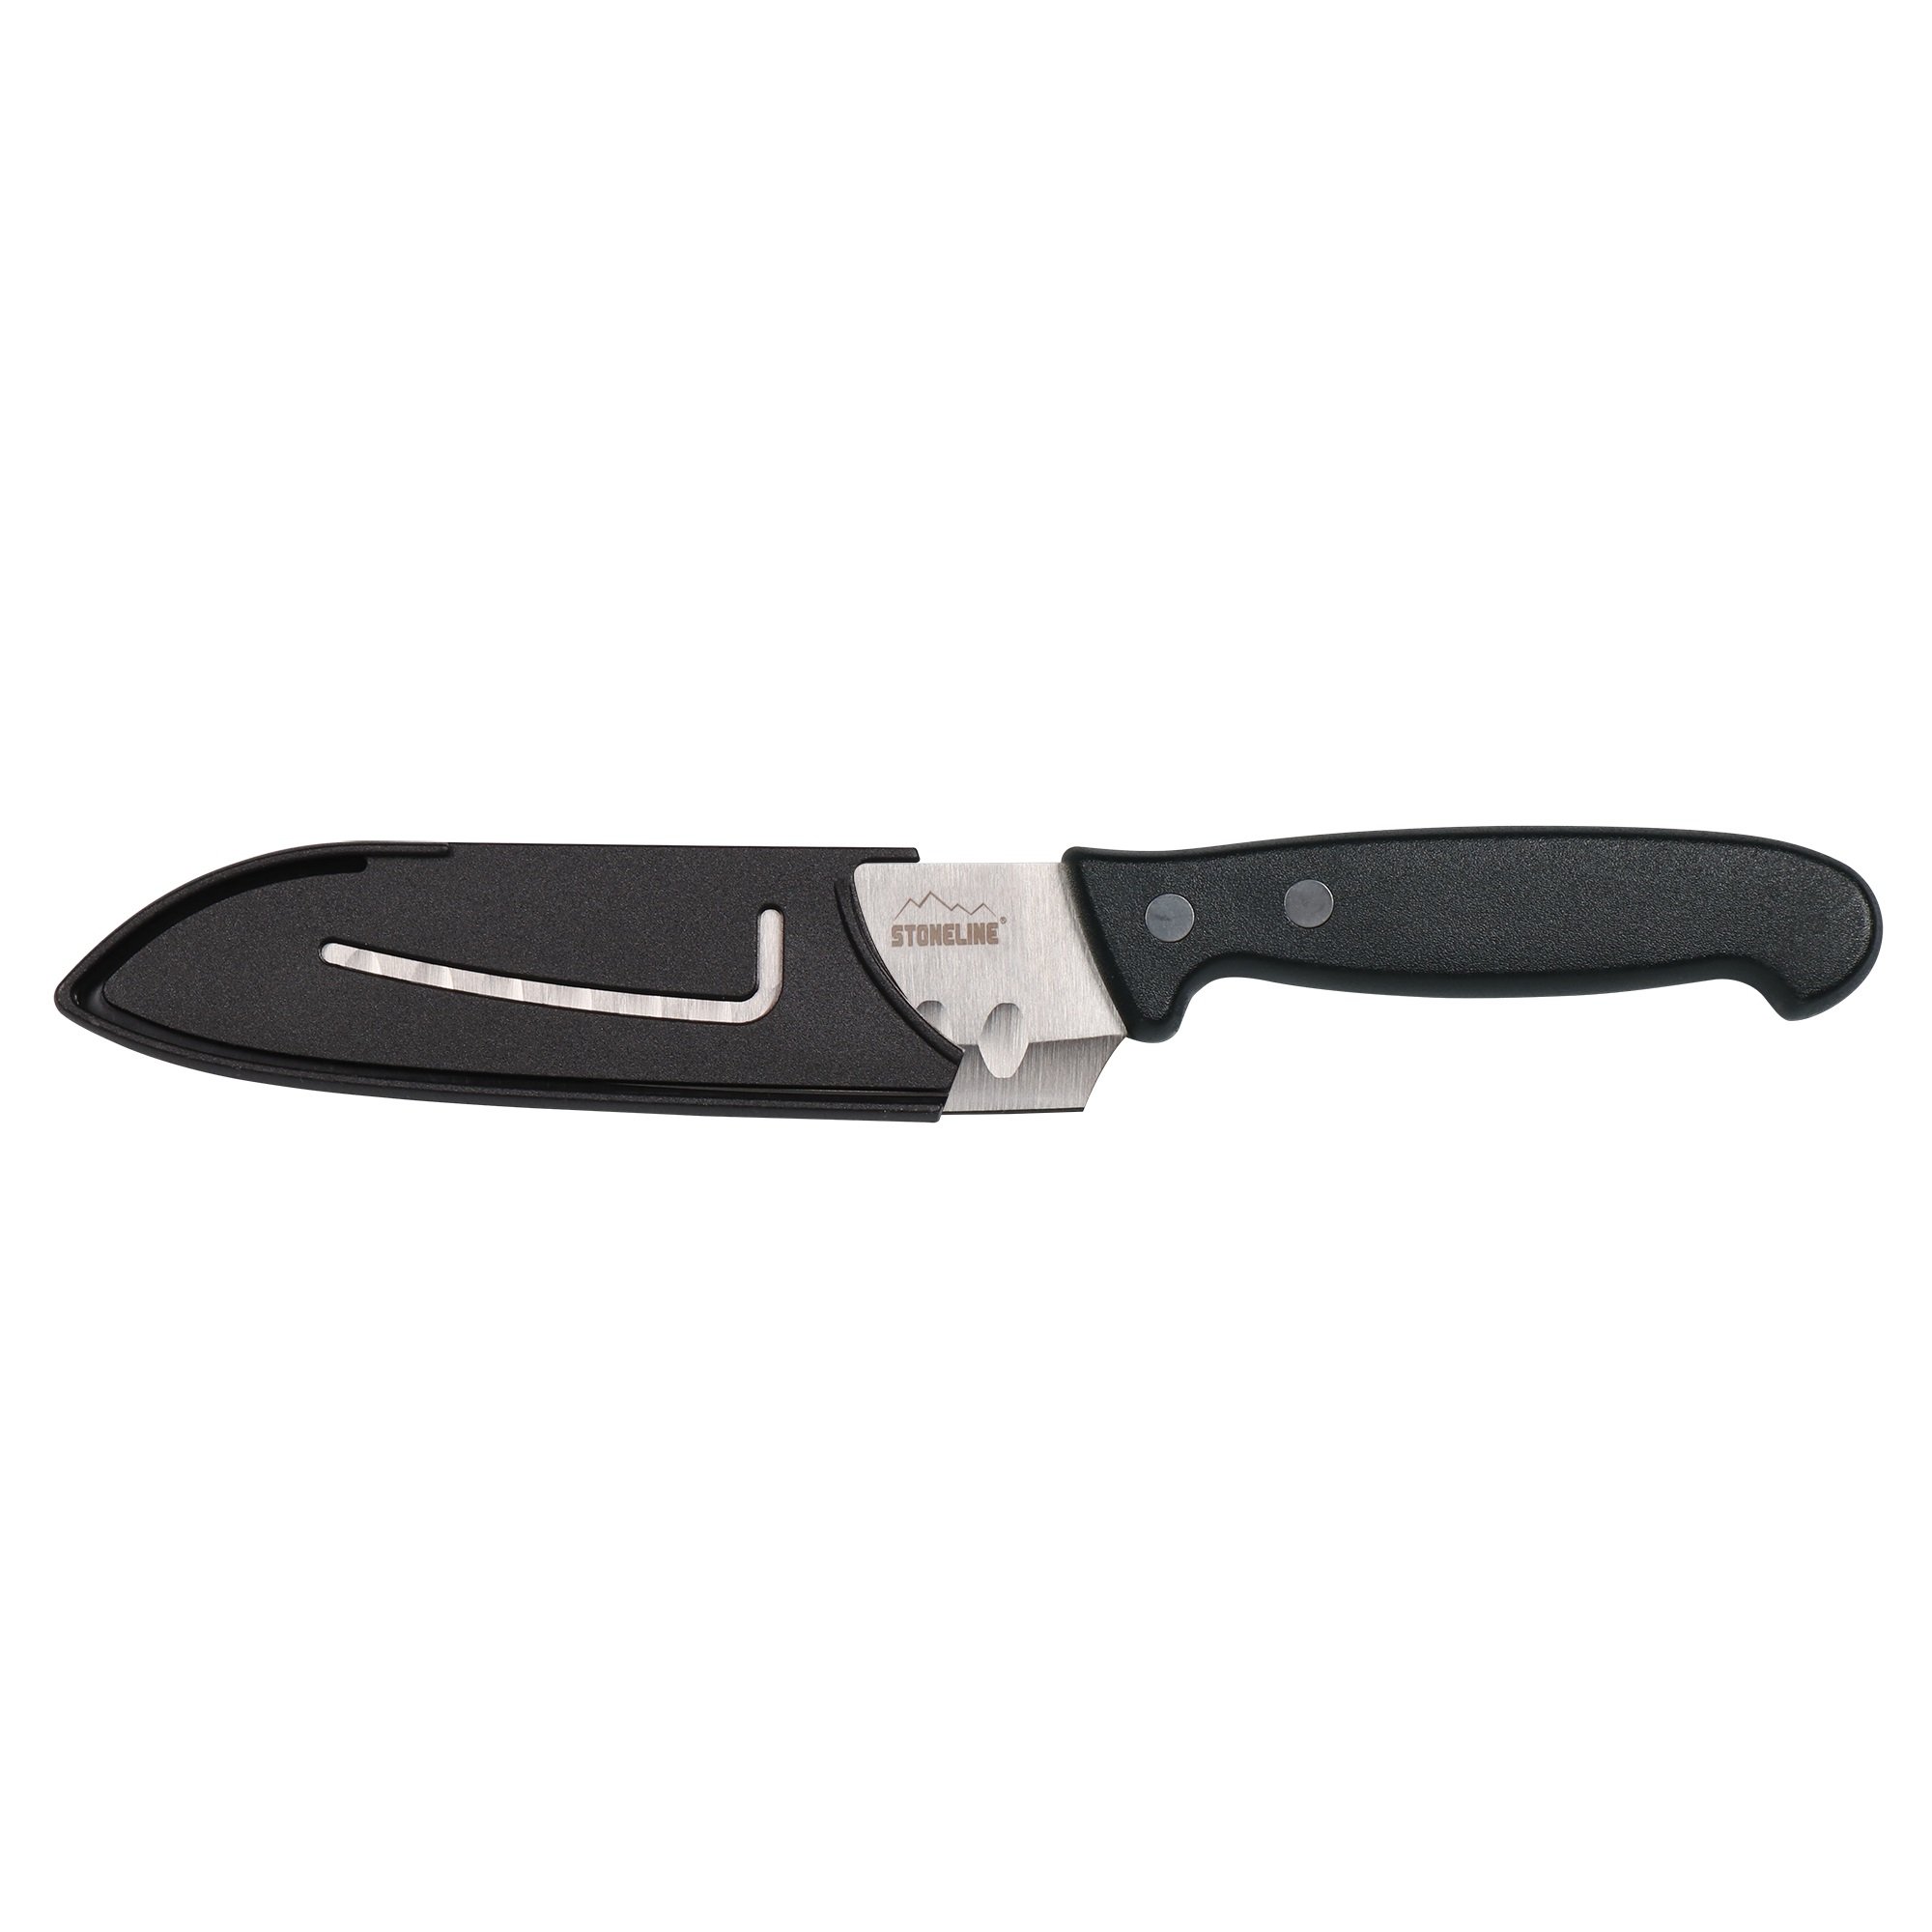 STONELINE® Stainless Steel Knife 22.6 cm Santoku Knife, Safety Sheath